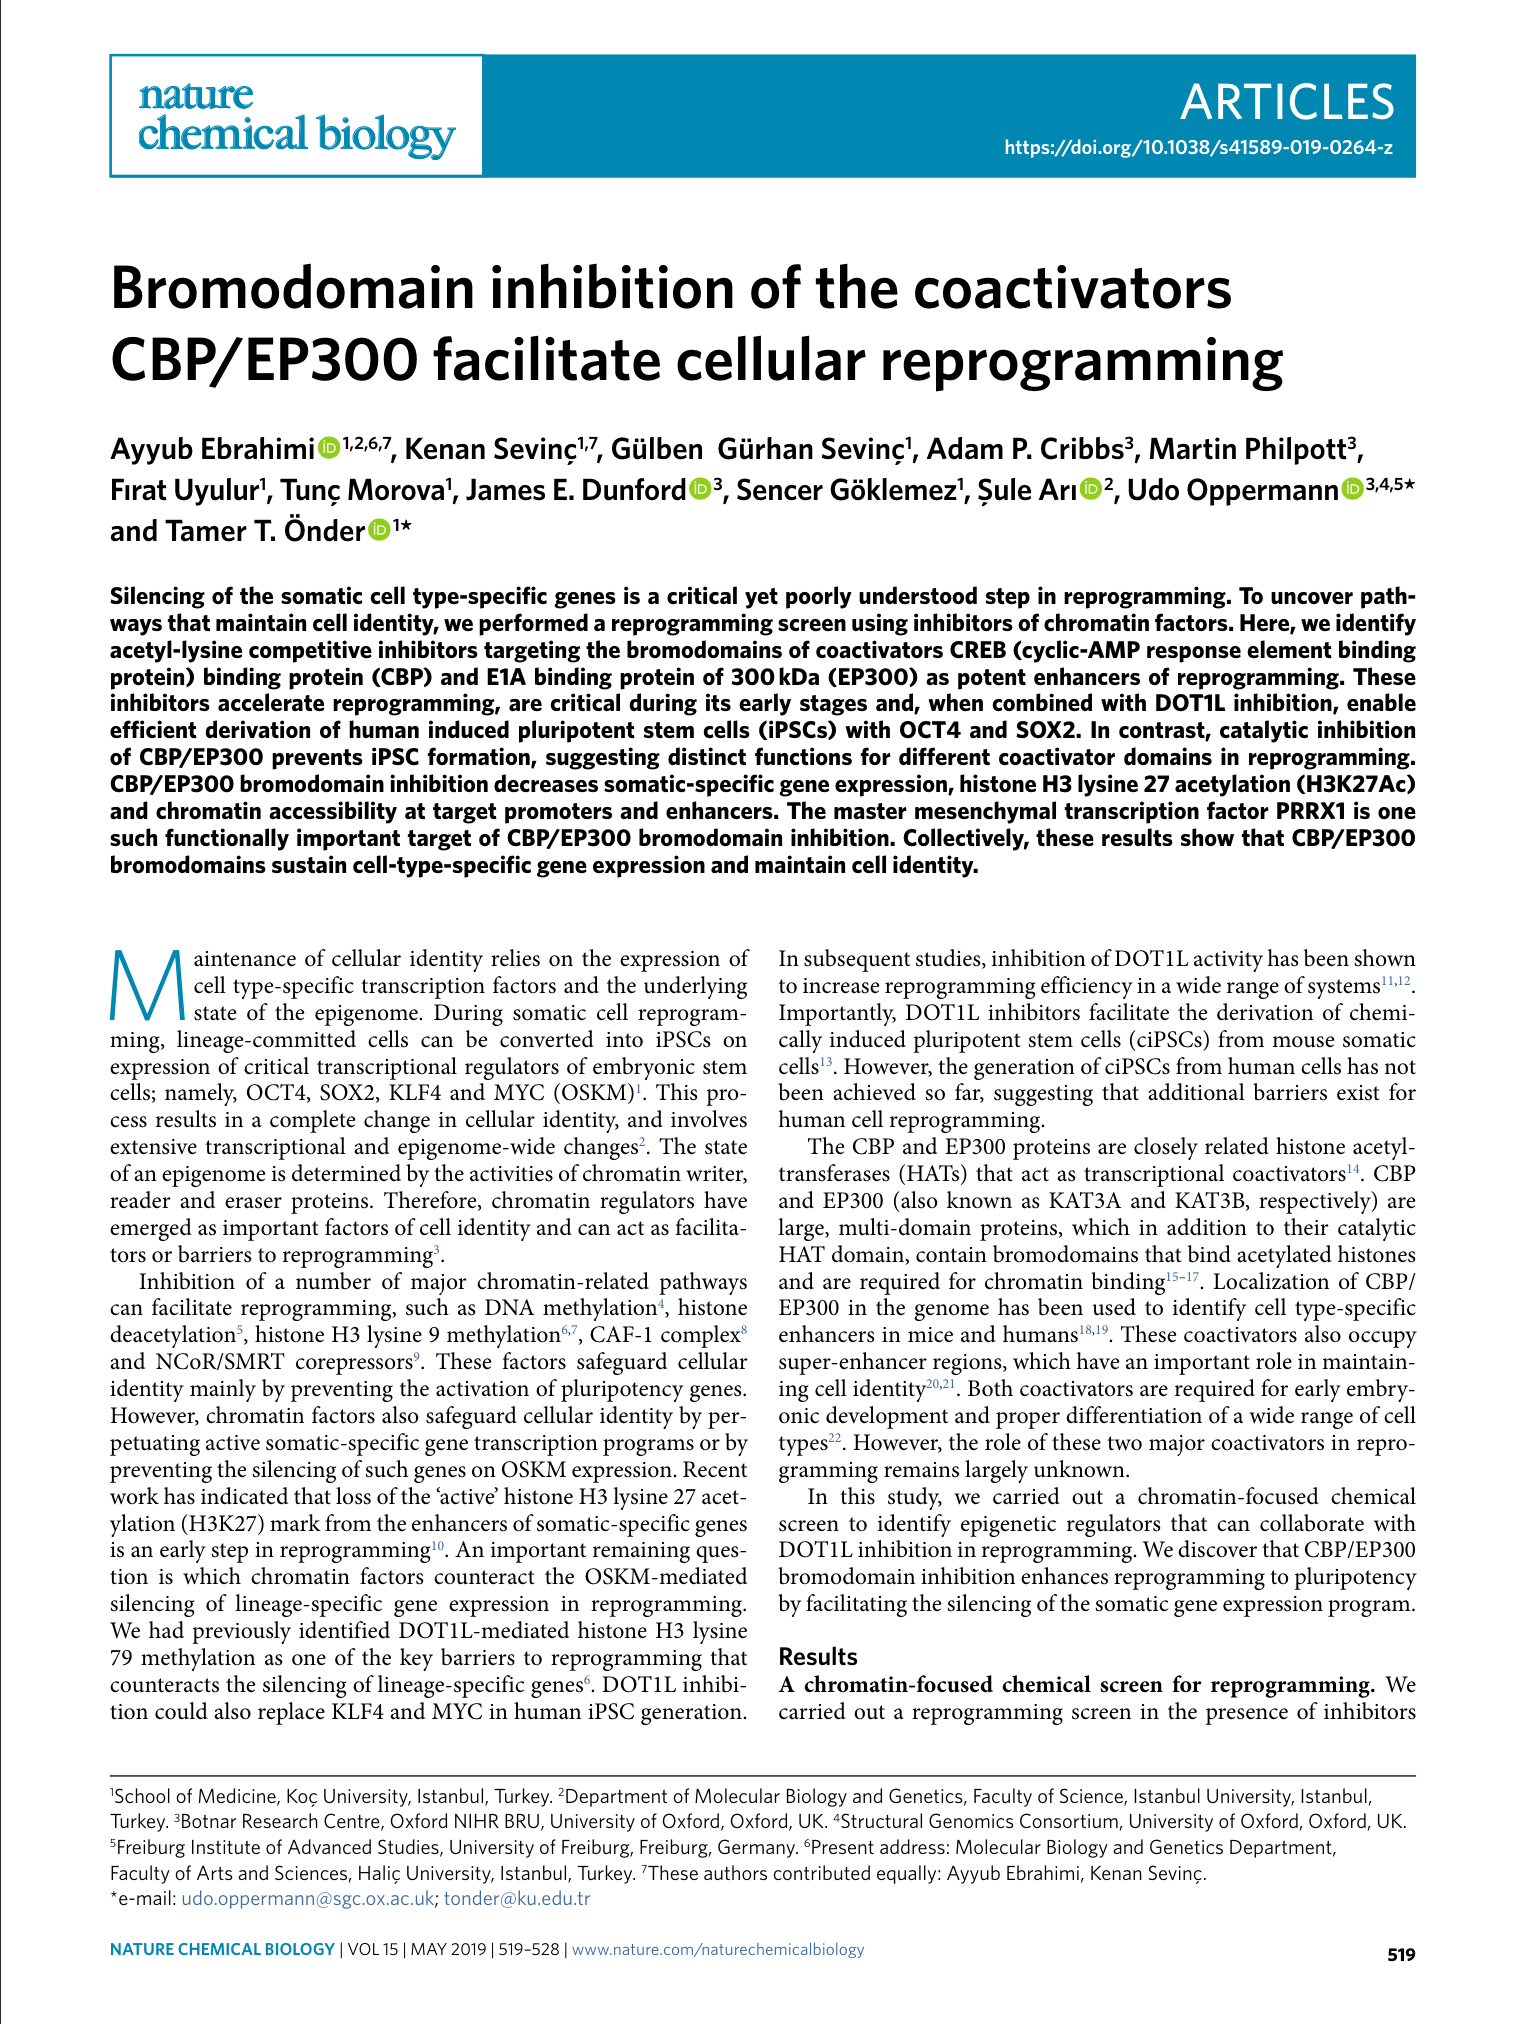 Bromodomain inhibition of the coactivators CBP/EP300 facilitate cellular reprogramming